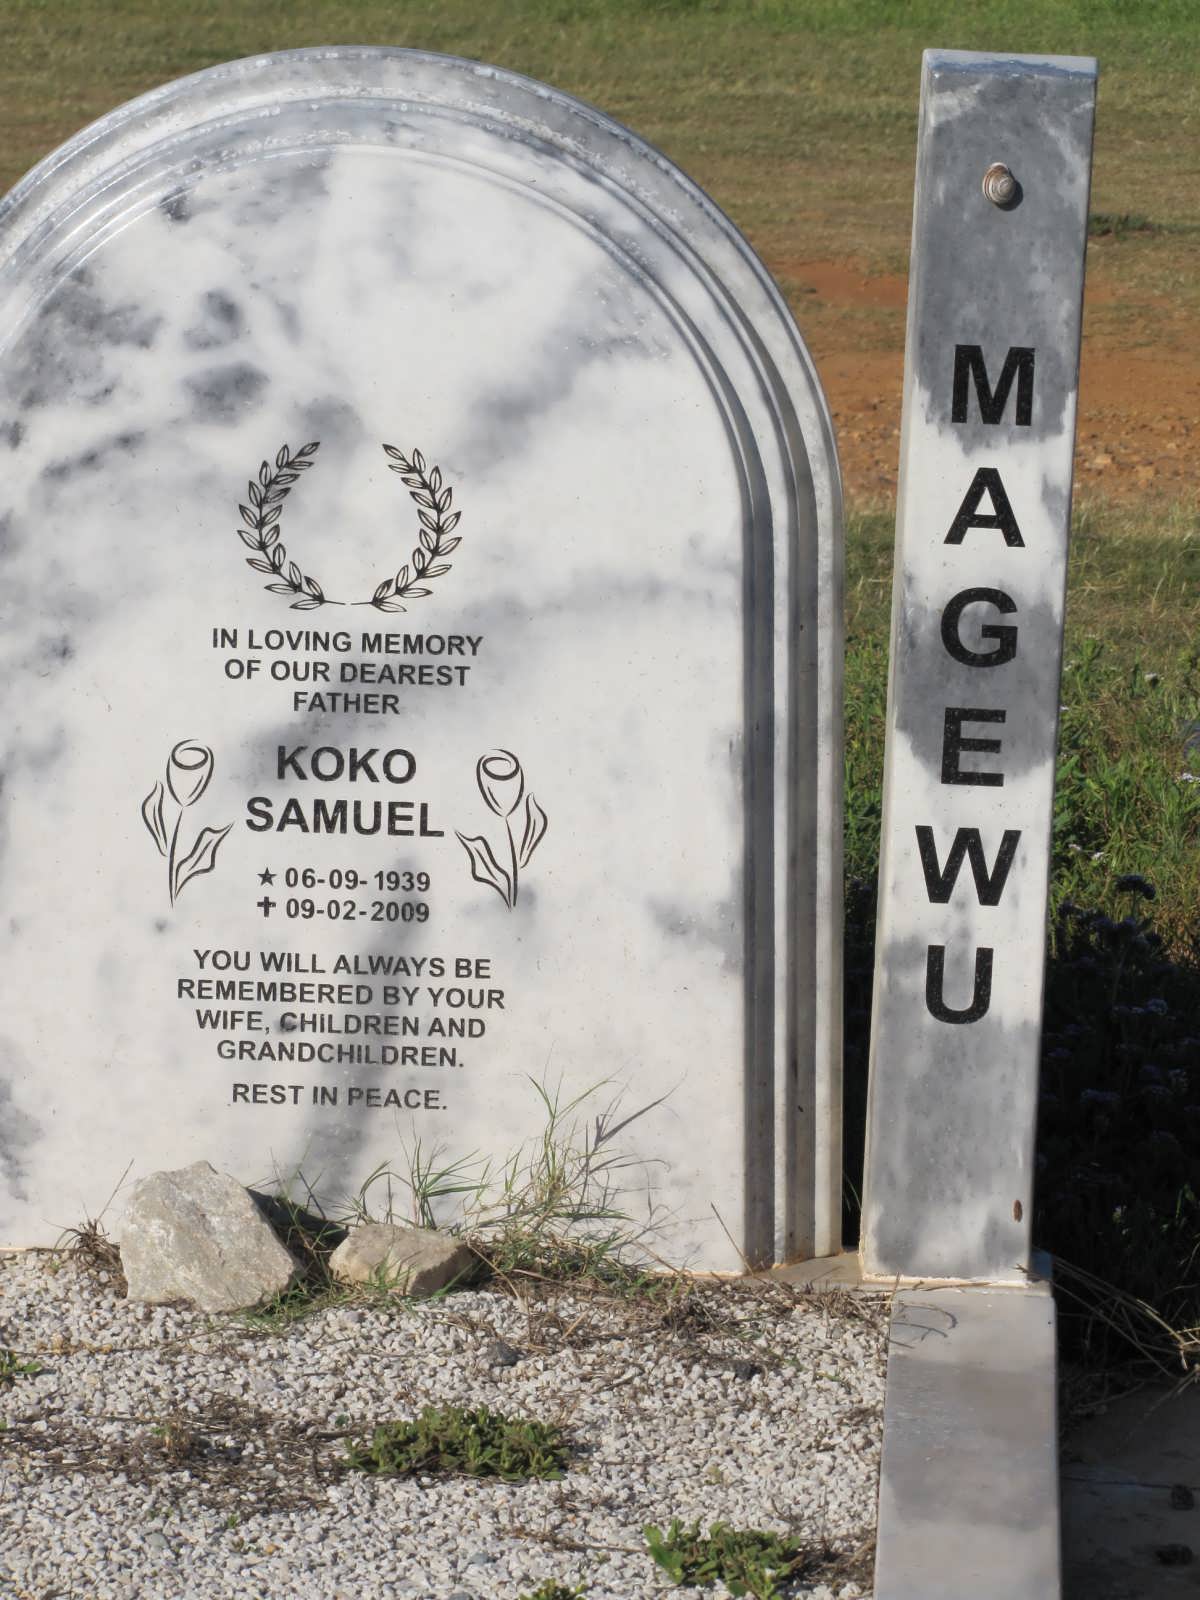 MAGEWU Koko Samuel 1939-2009